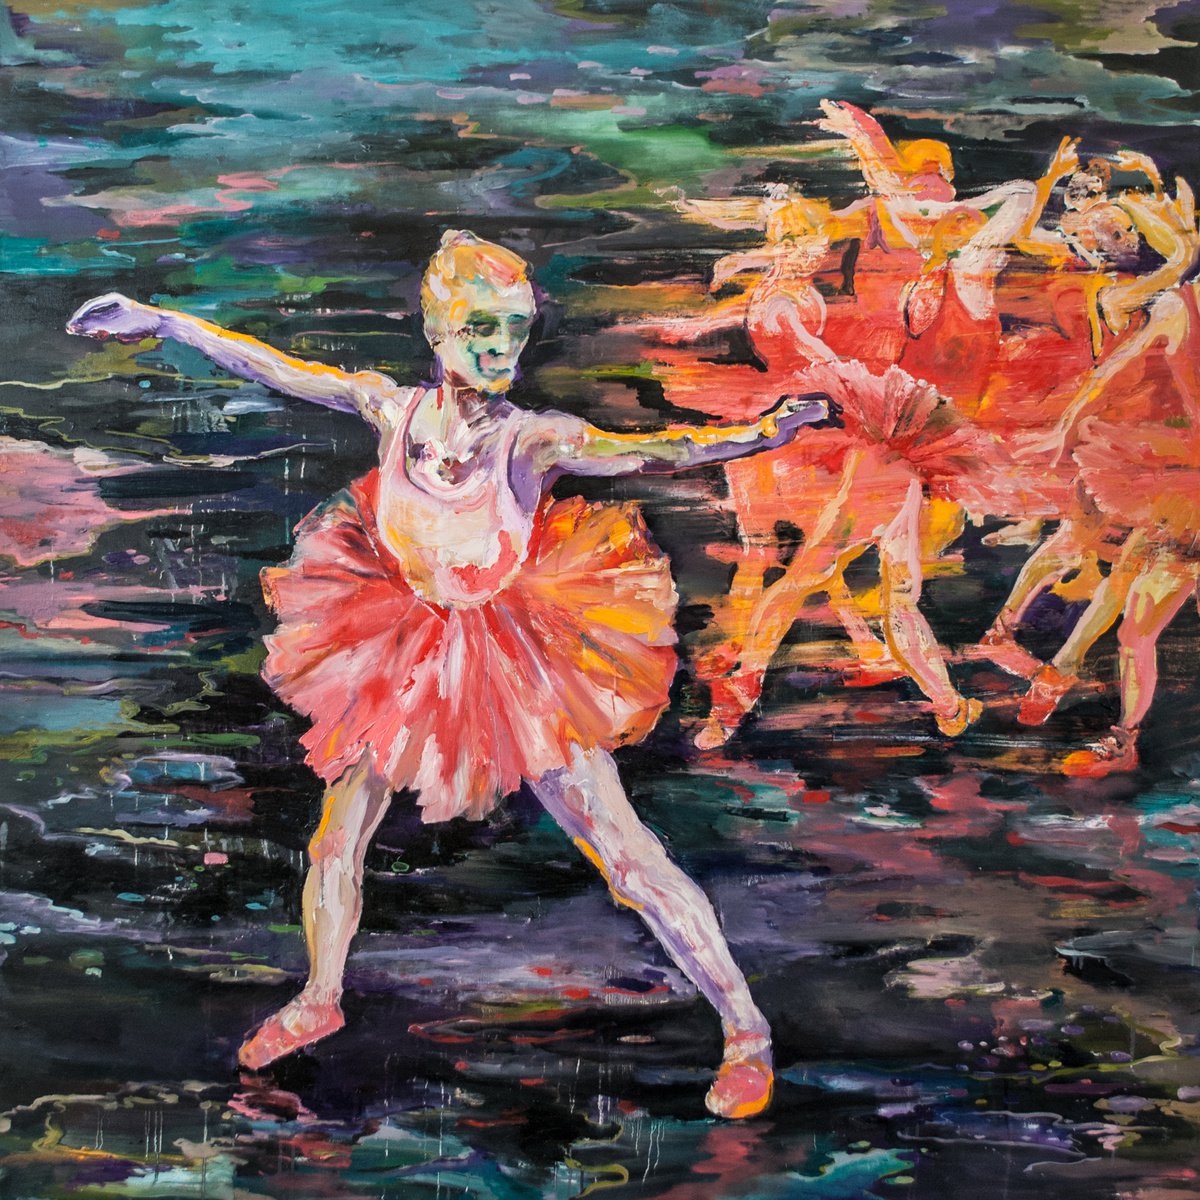 Dancers of Love by Dominic-Petru Virtosu